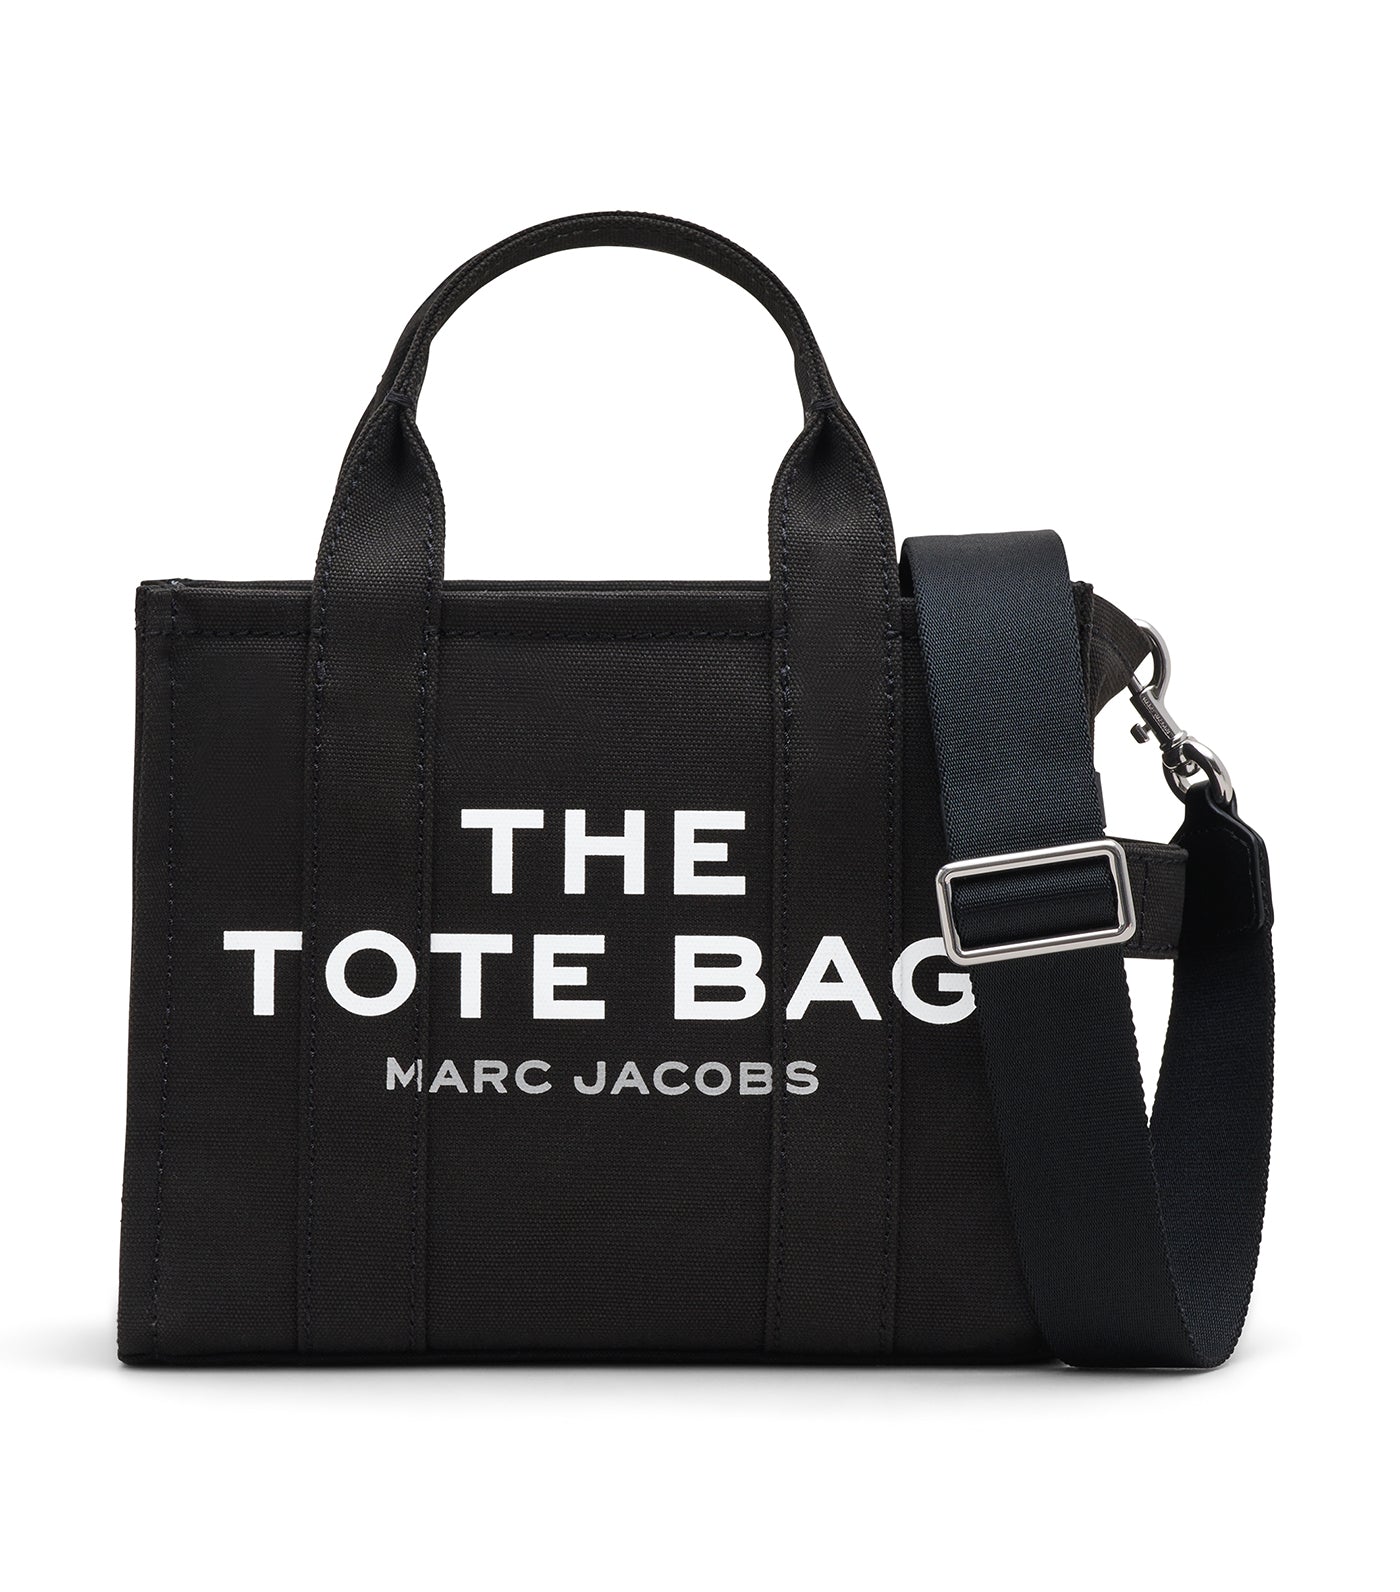 The Small Tote Bag Black